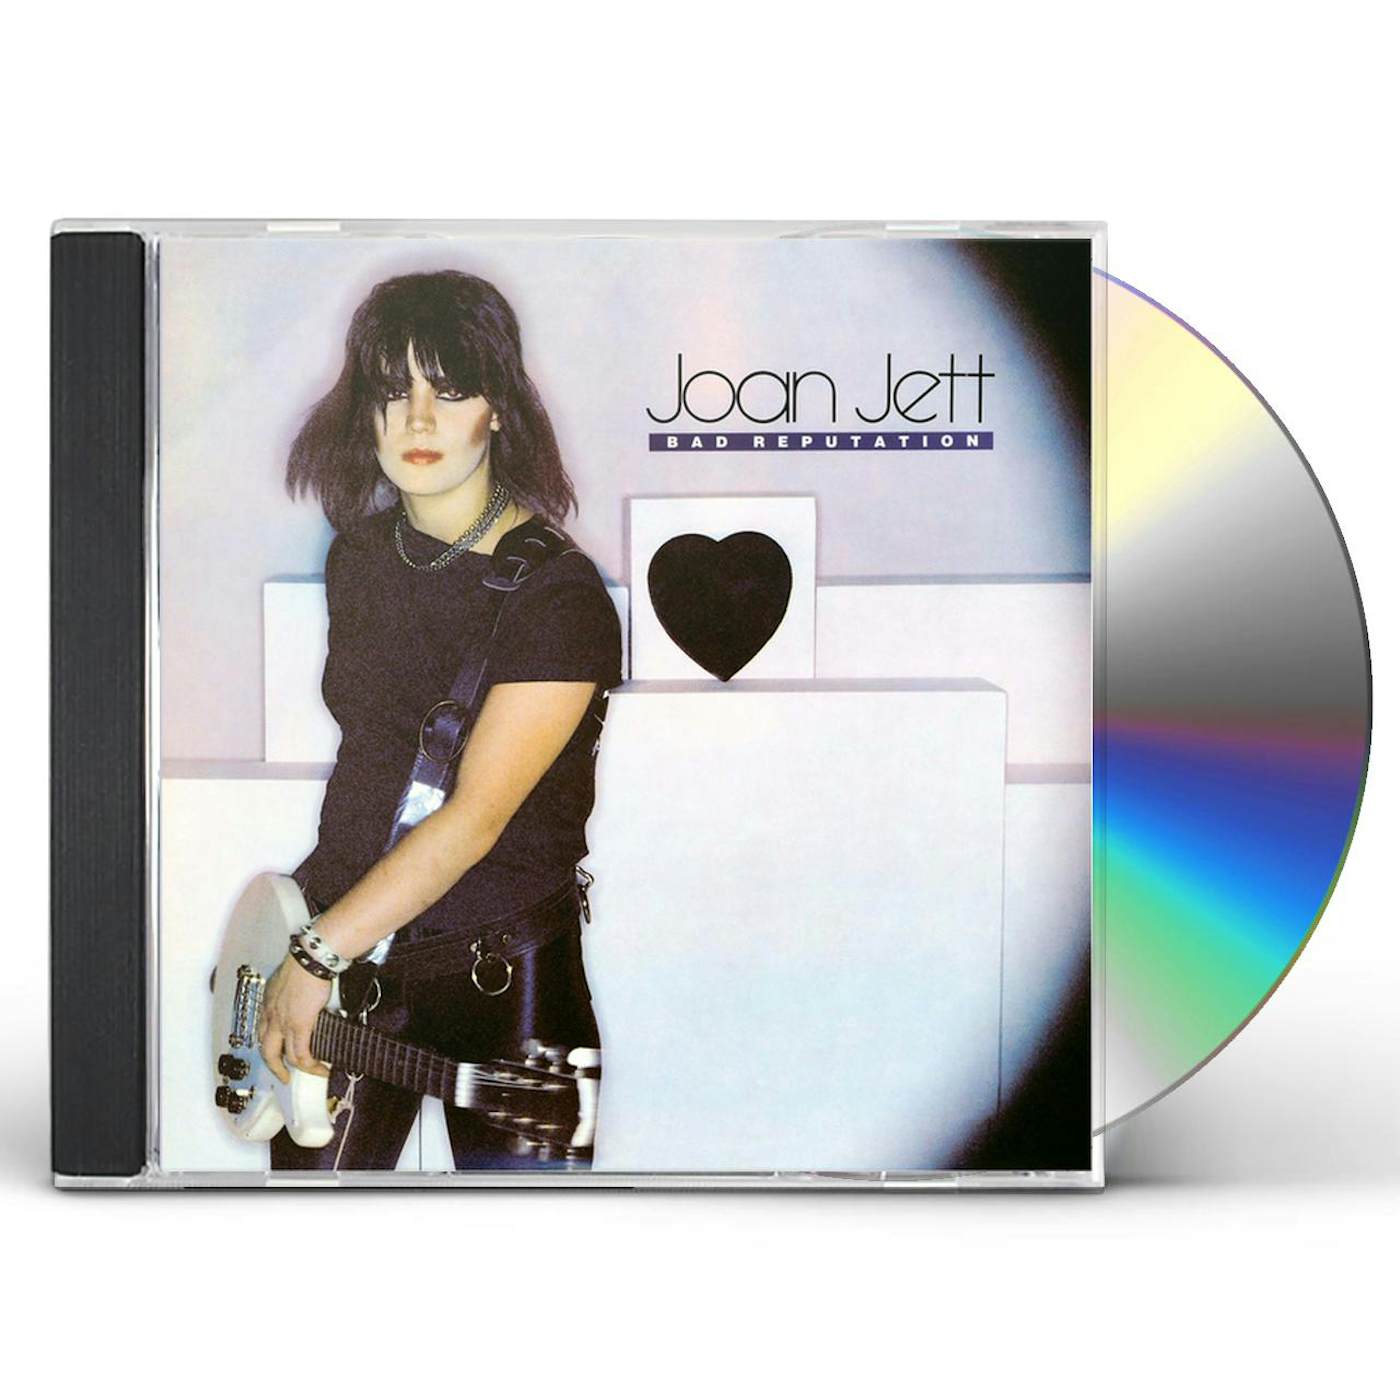 Joan Jett & the Blackhearts BAD REPUTATION CD